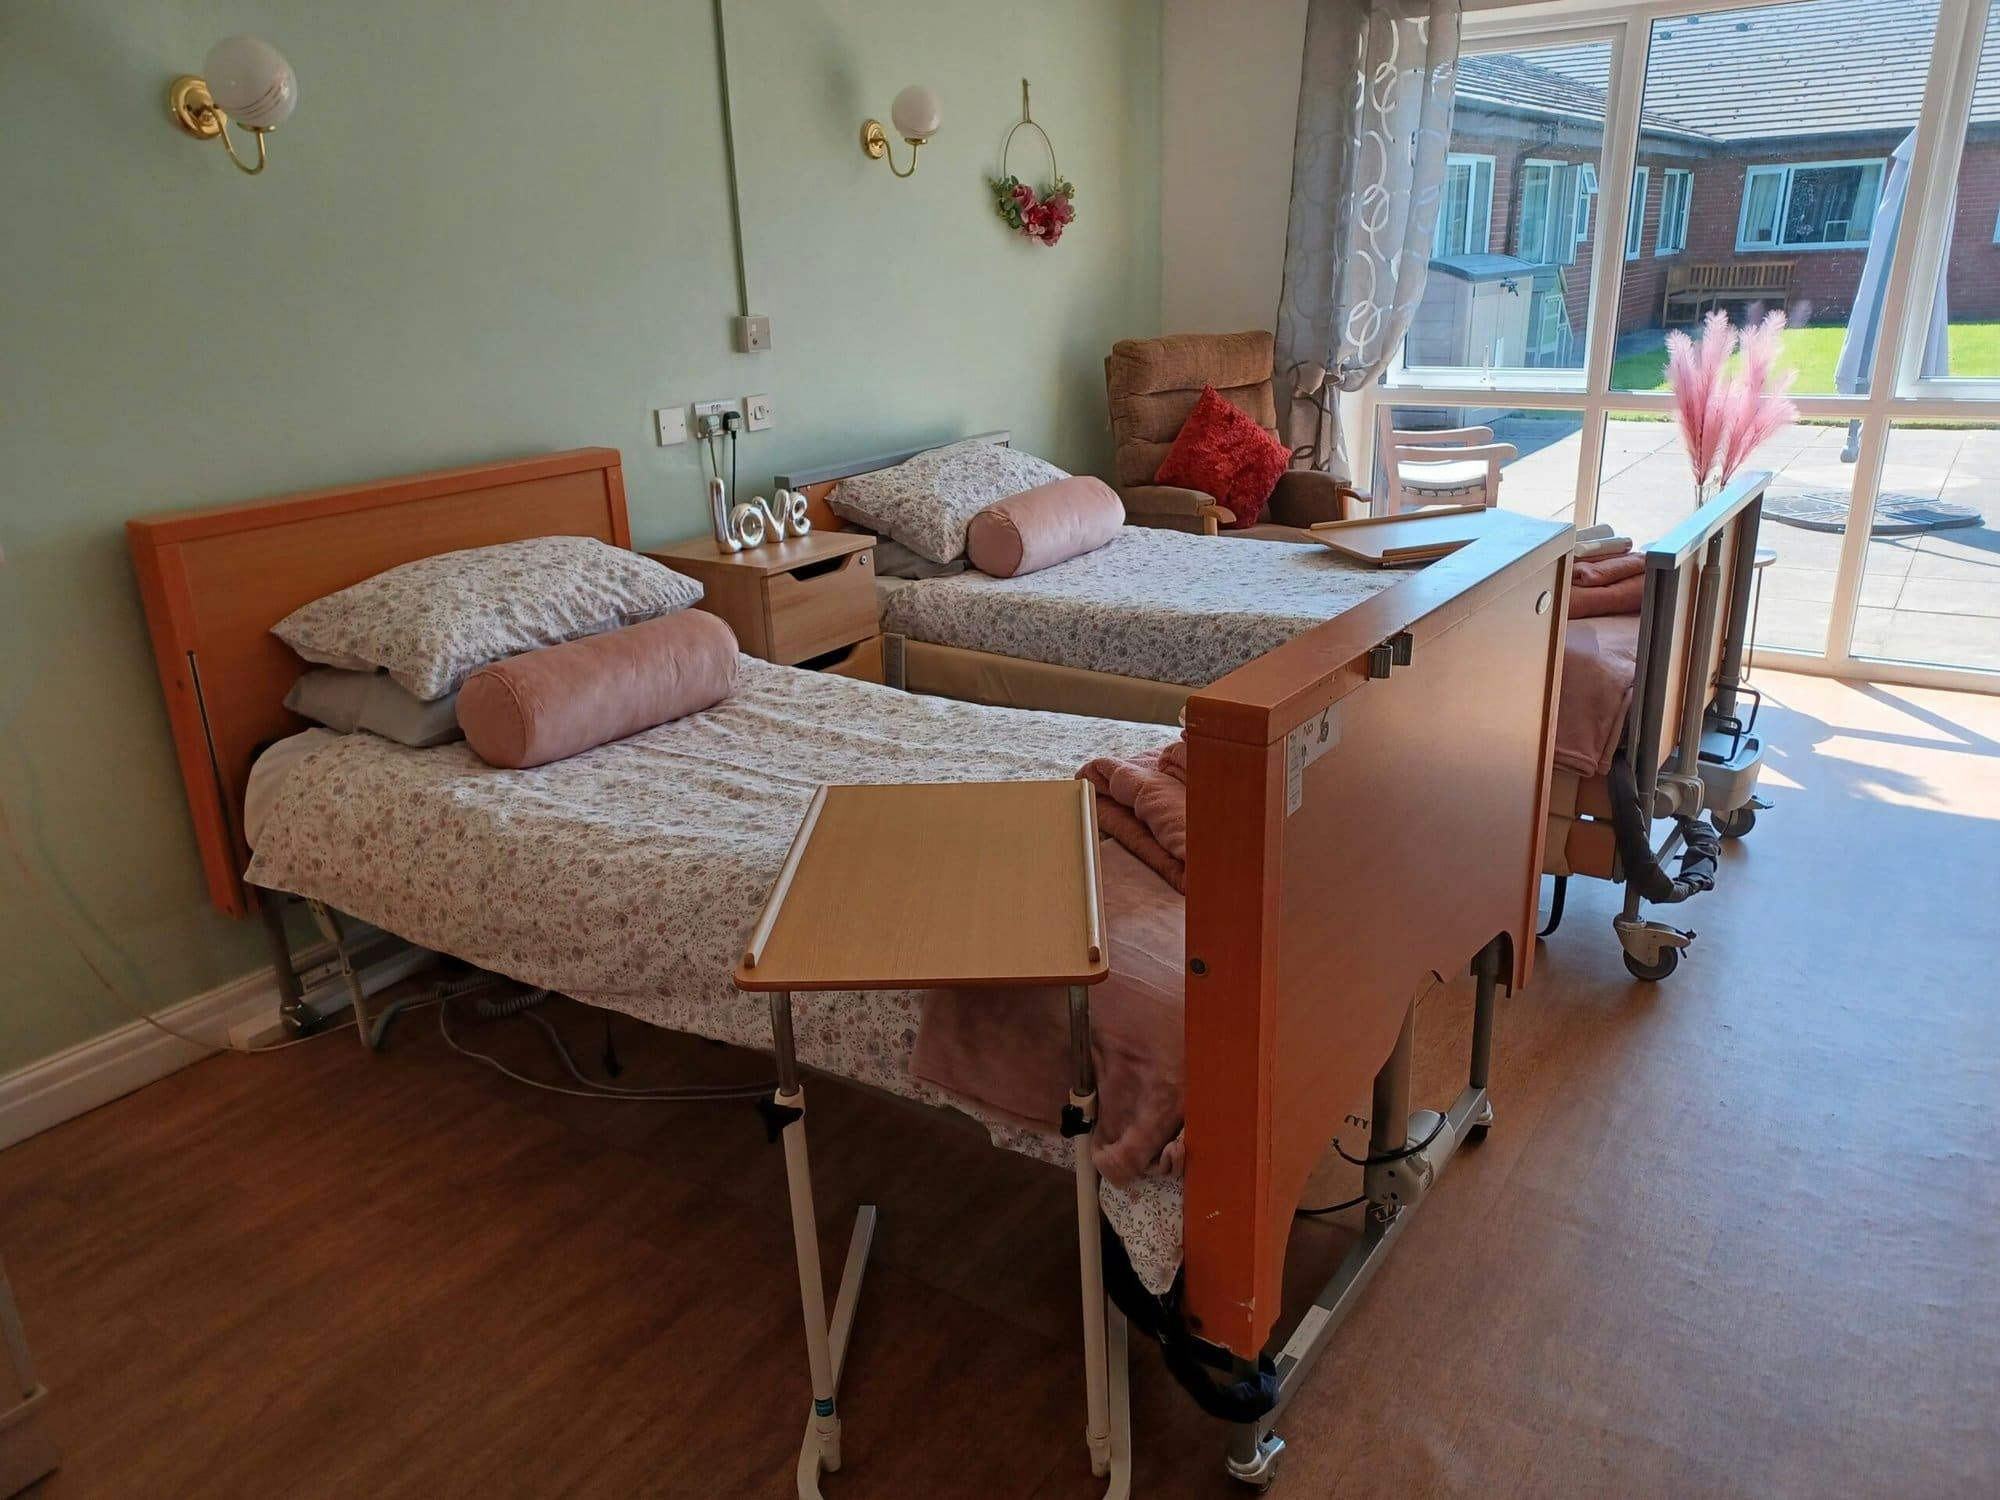 Bedroom at Mahogany Care Home, Newtown, Wigan, Lancashire